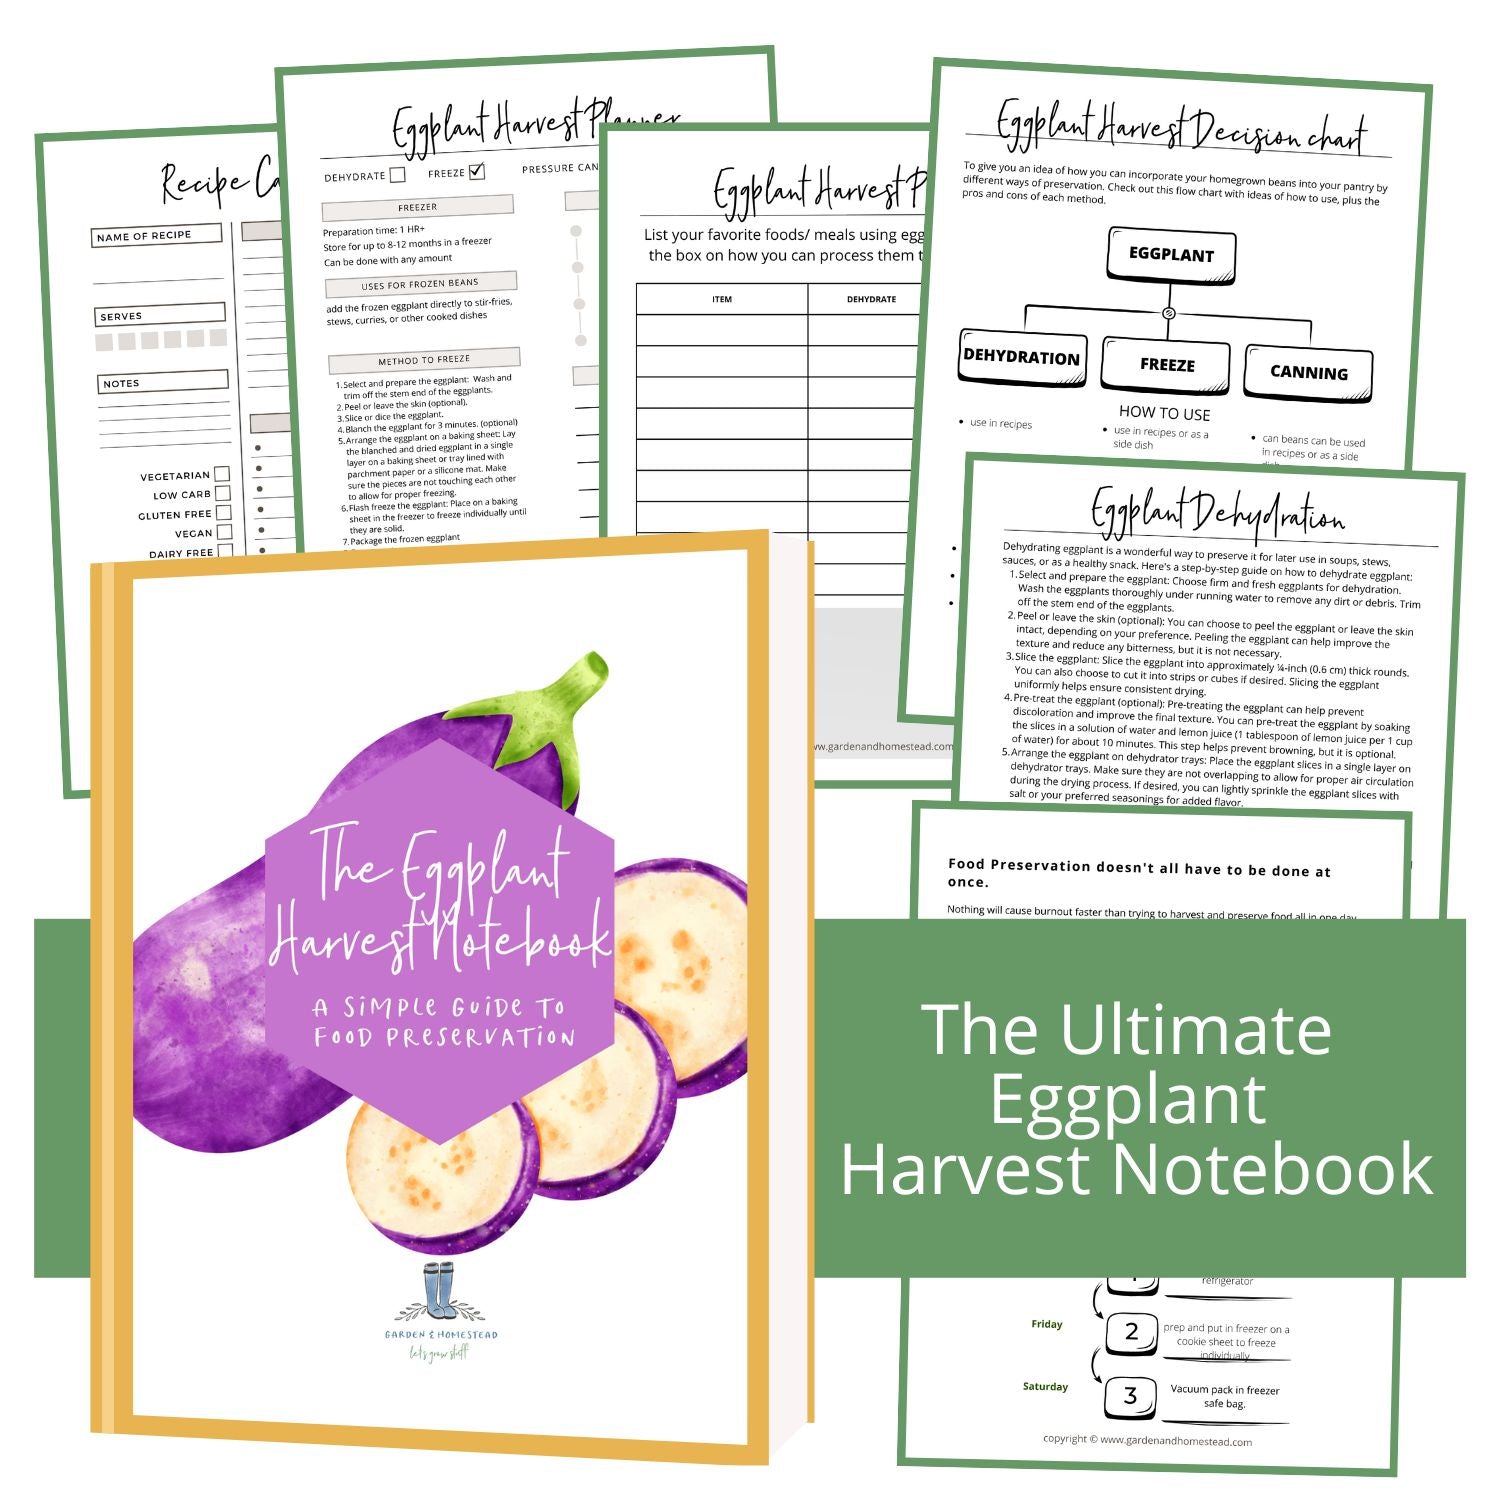 The Eggplant Harvest Notebook